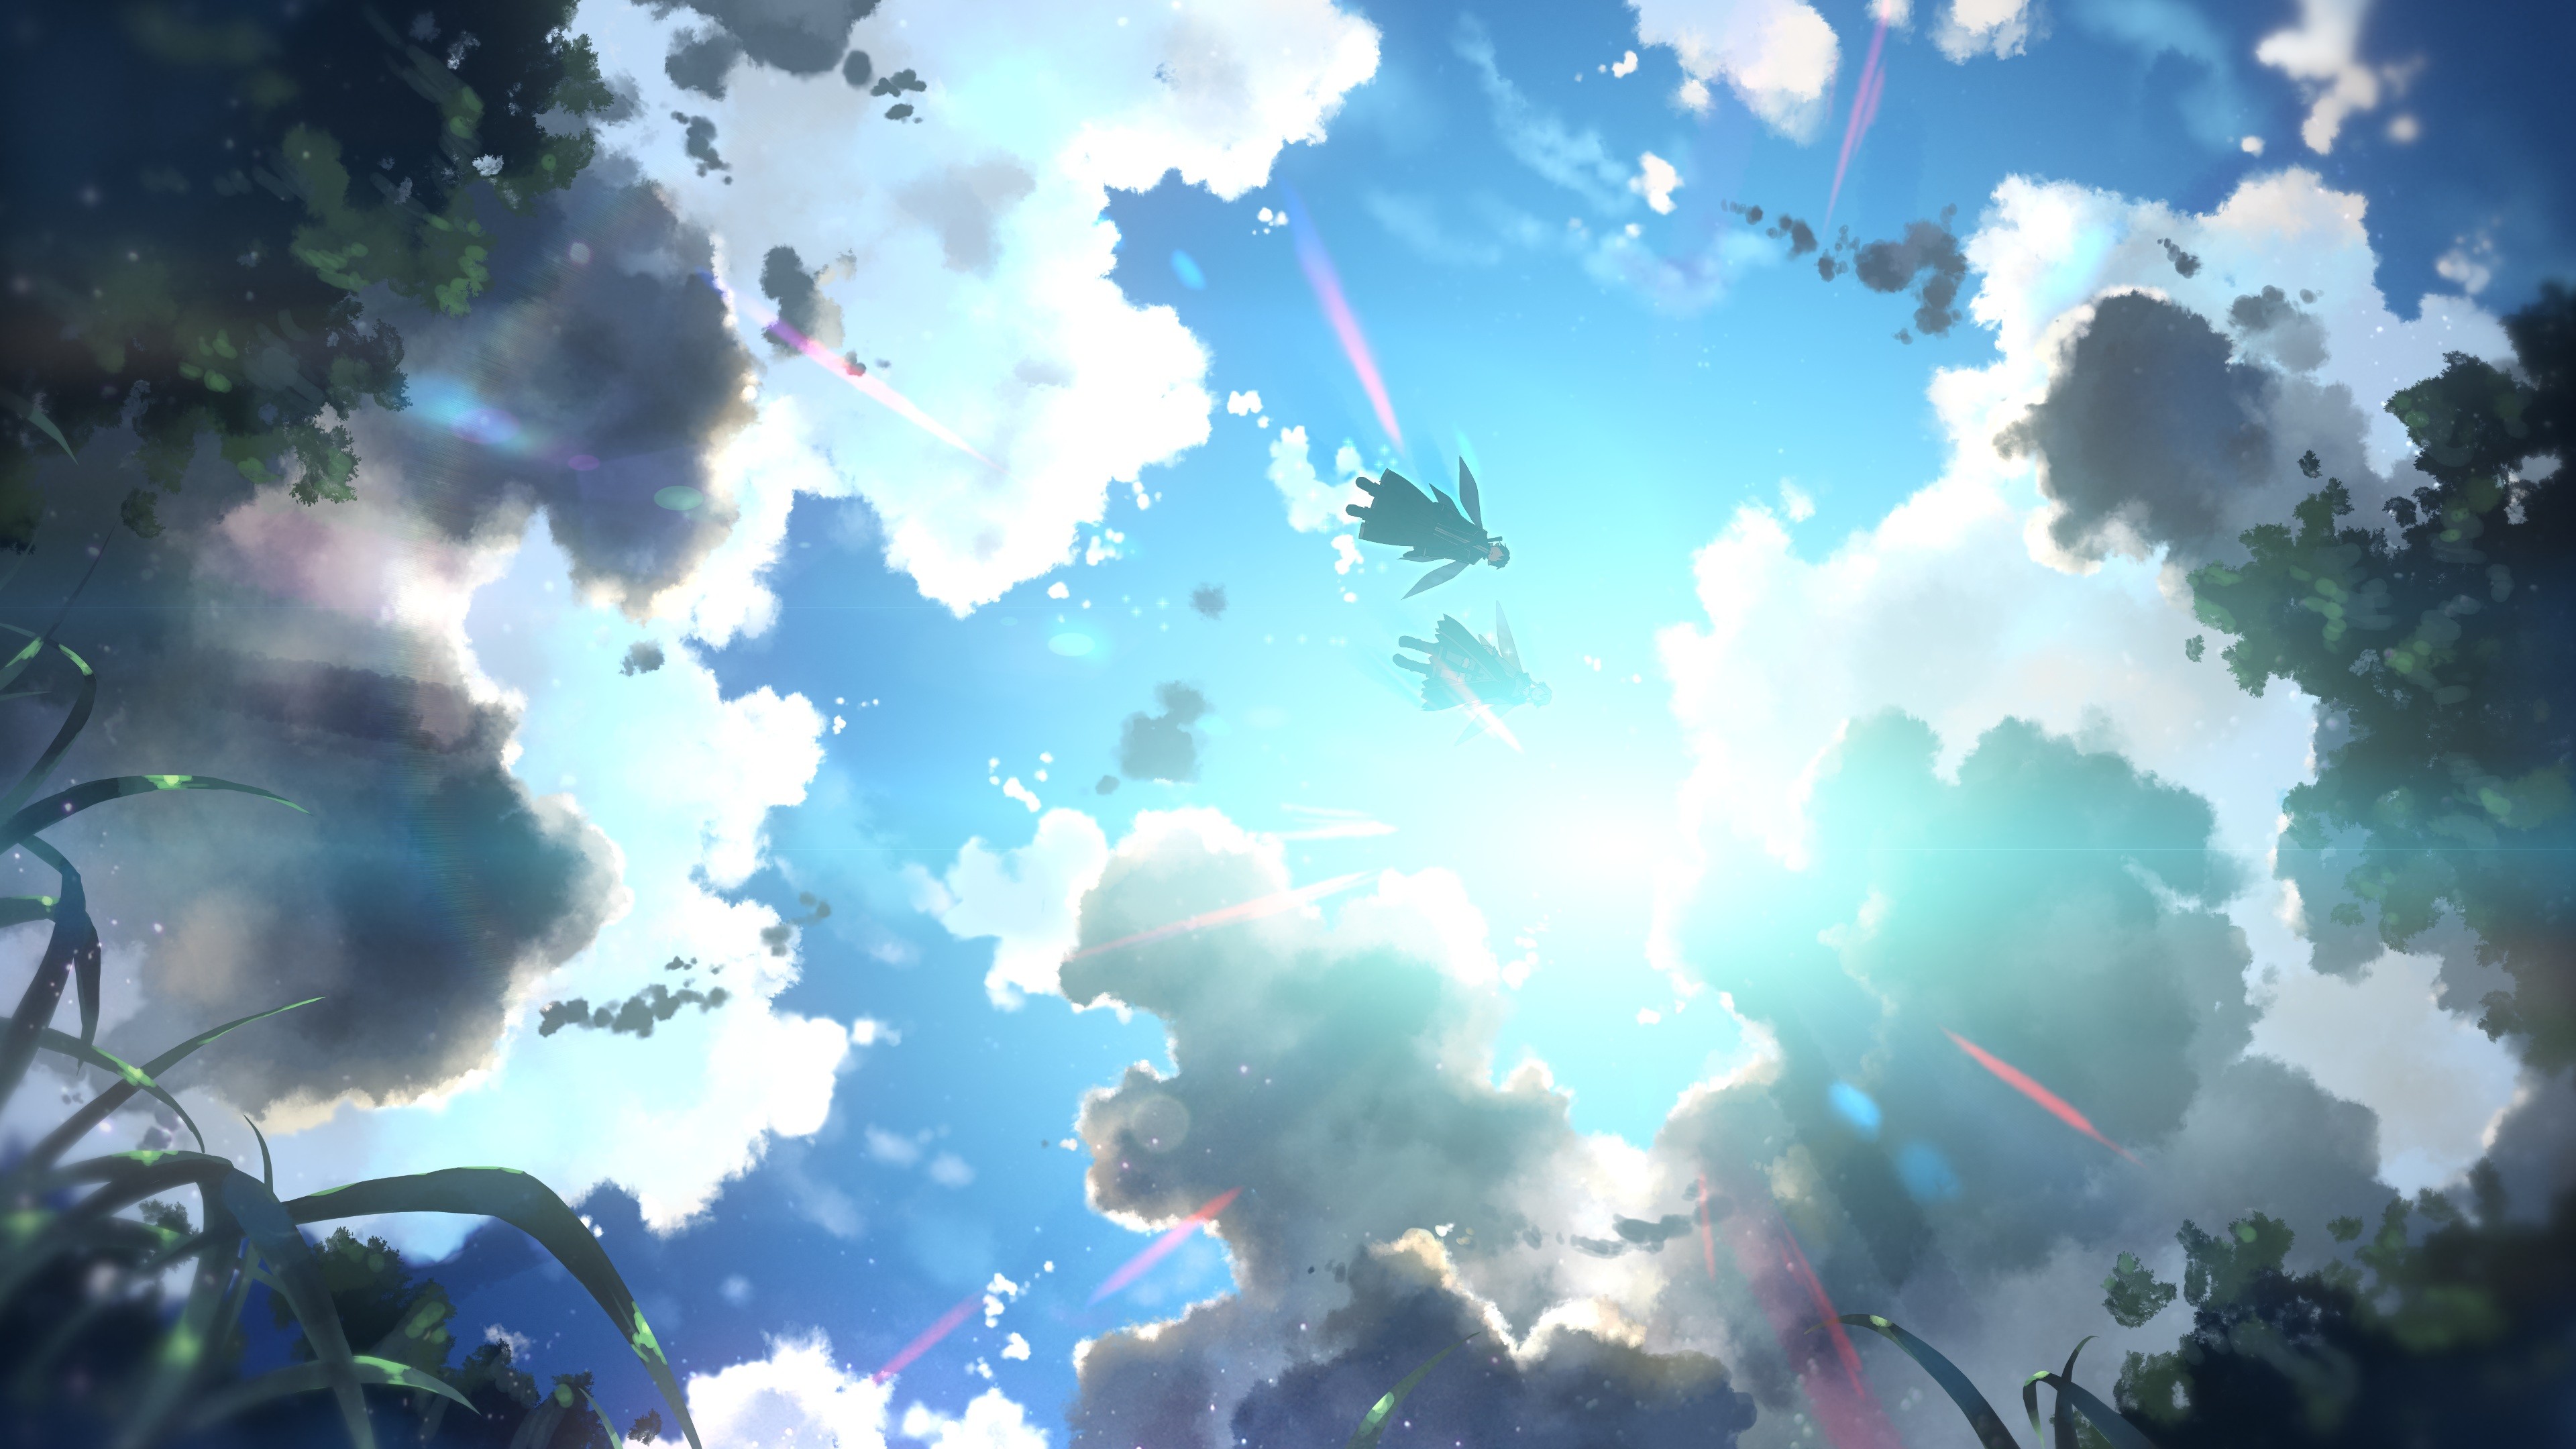 Anime 3840x2160 Yuuki Tatsuya Sword Art Online clouds sky wings flying anime artwork top view reflection worm's eye view outdoors Yuuki Asuna (Sword Art Online) Kirigaya Kazuto (Sword Art Online)